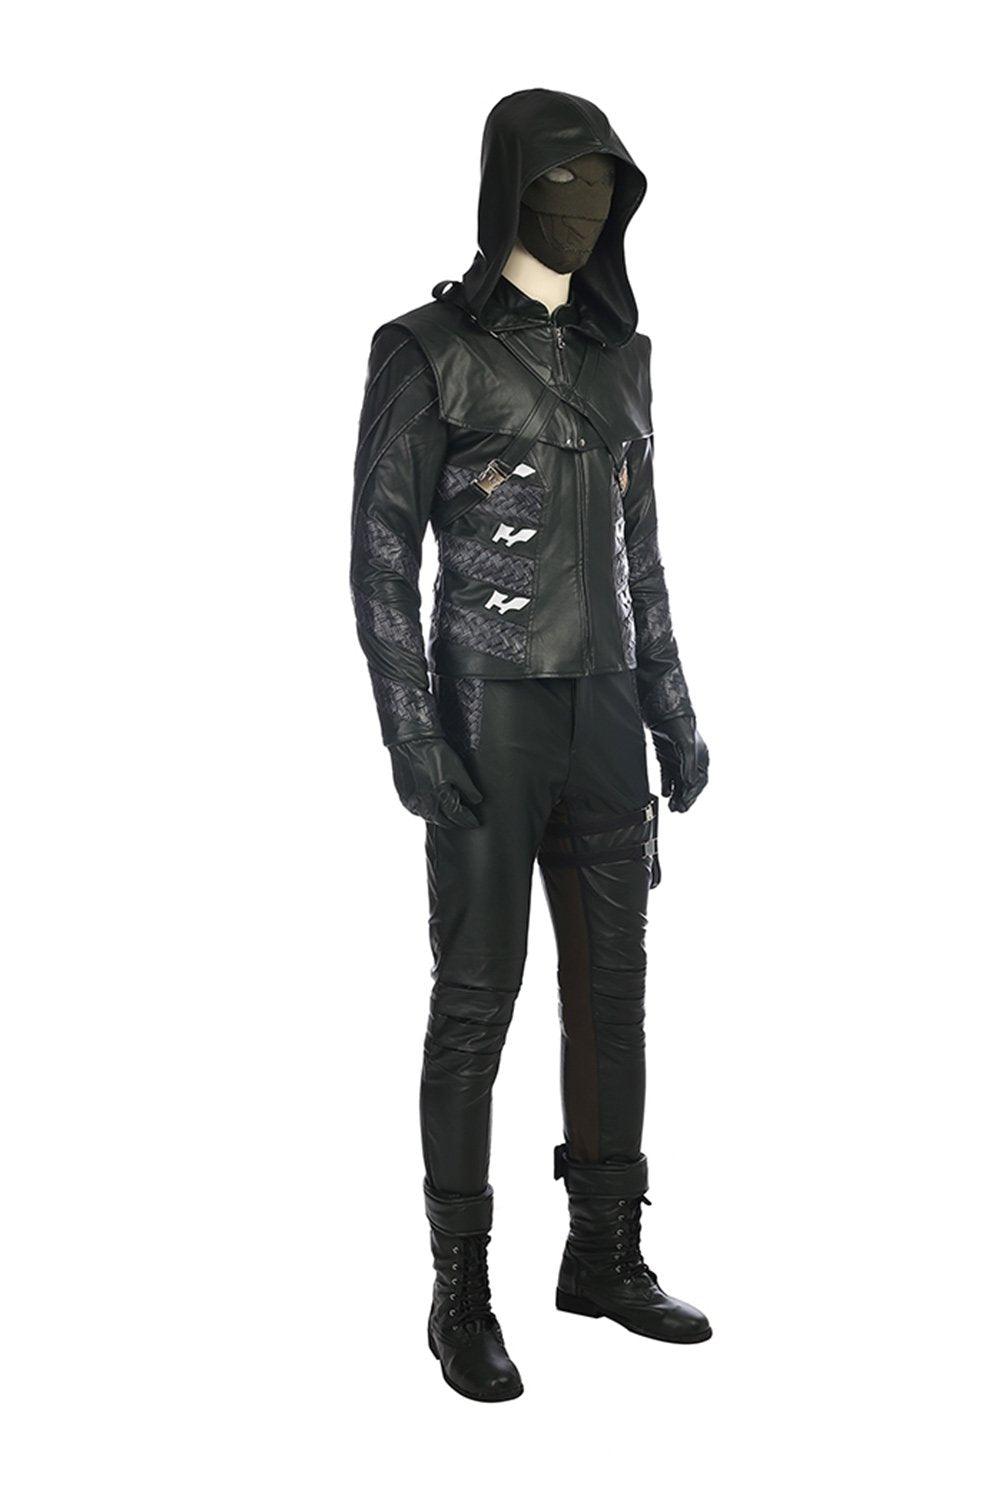 Arrow Season 5 Adrian Chase Prometheus Outfit Cosplay Costume